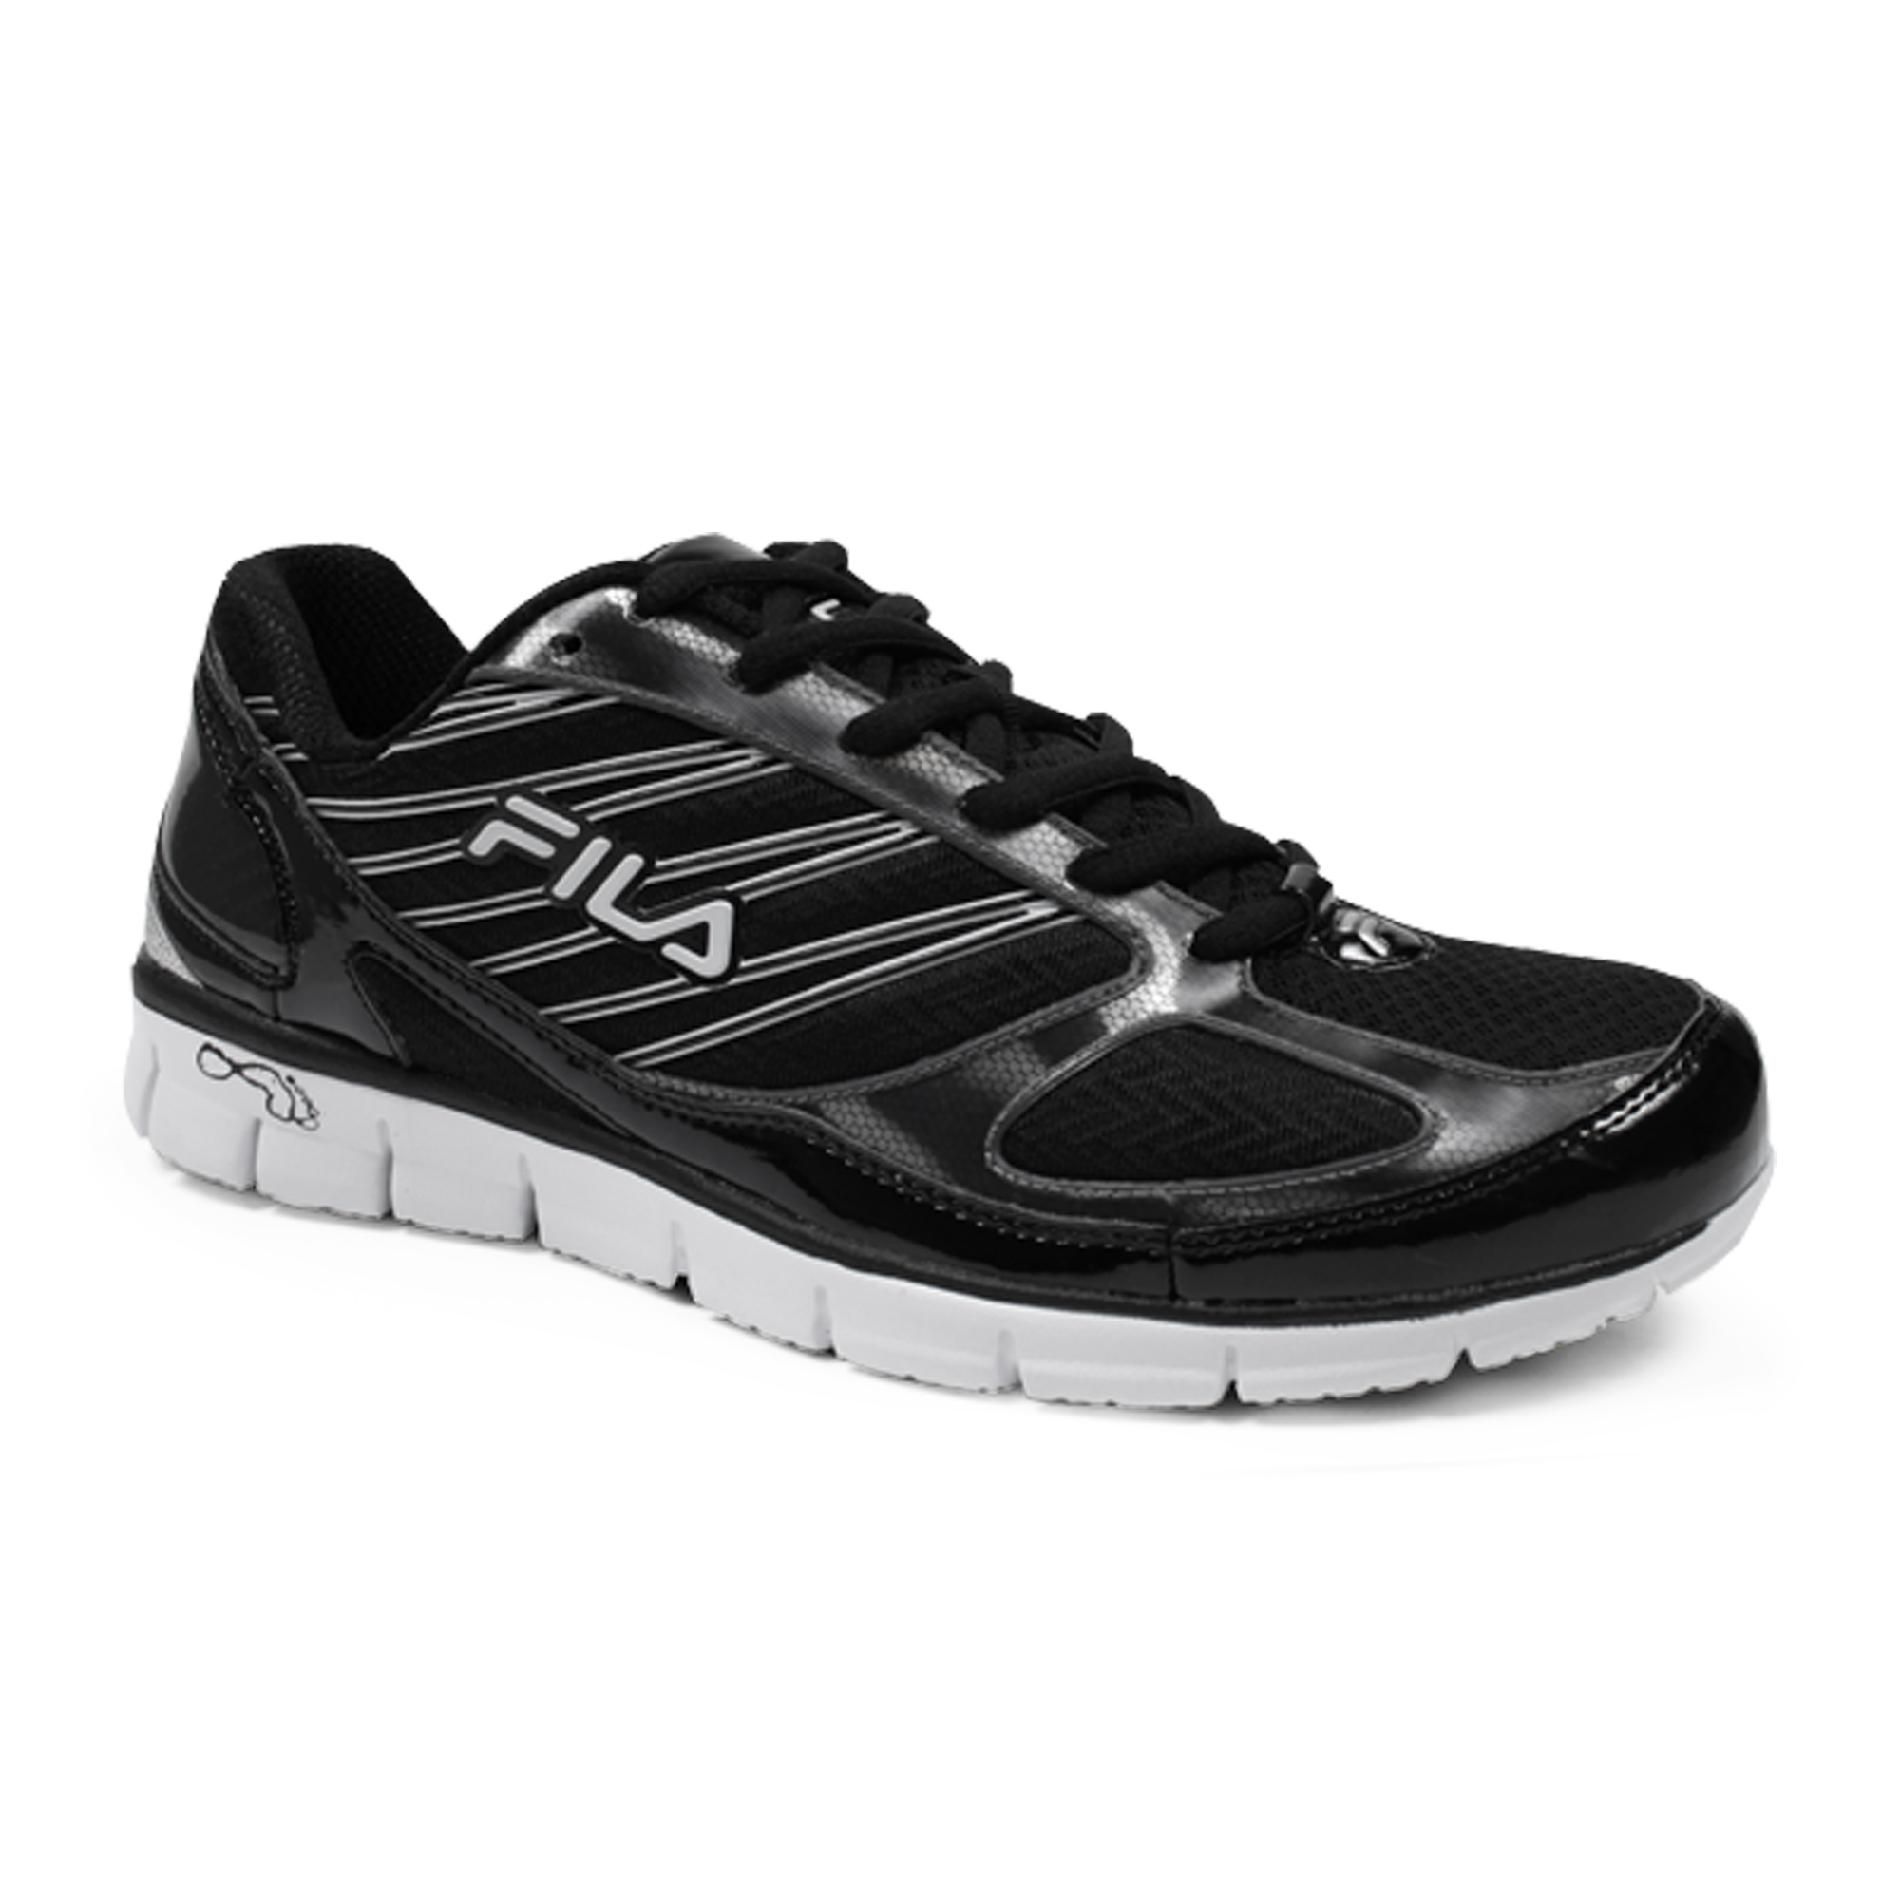 Men's Running Shoe Memory 2A Advanced - Black